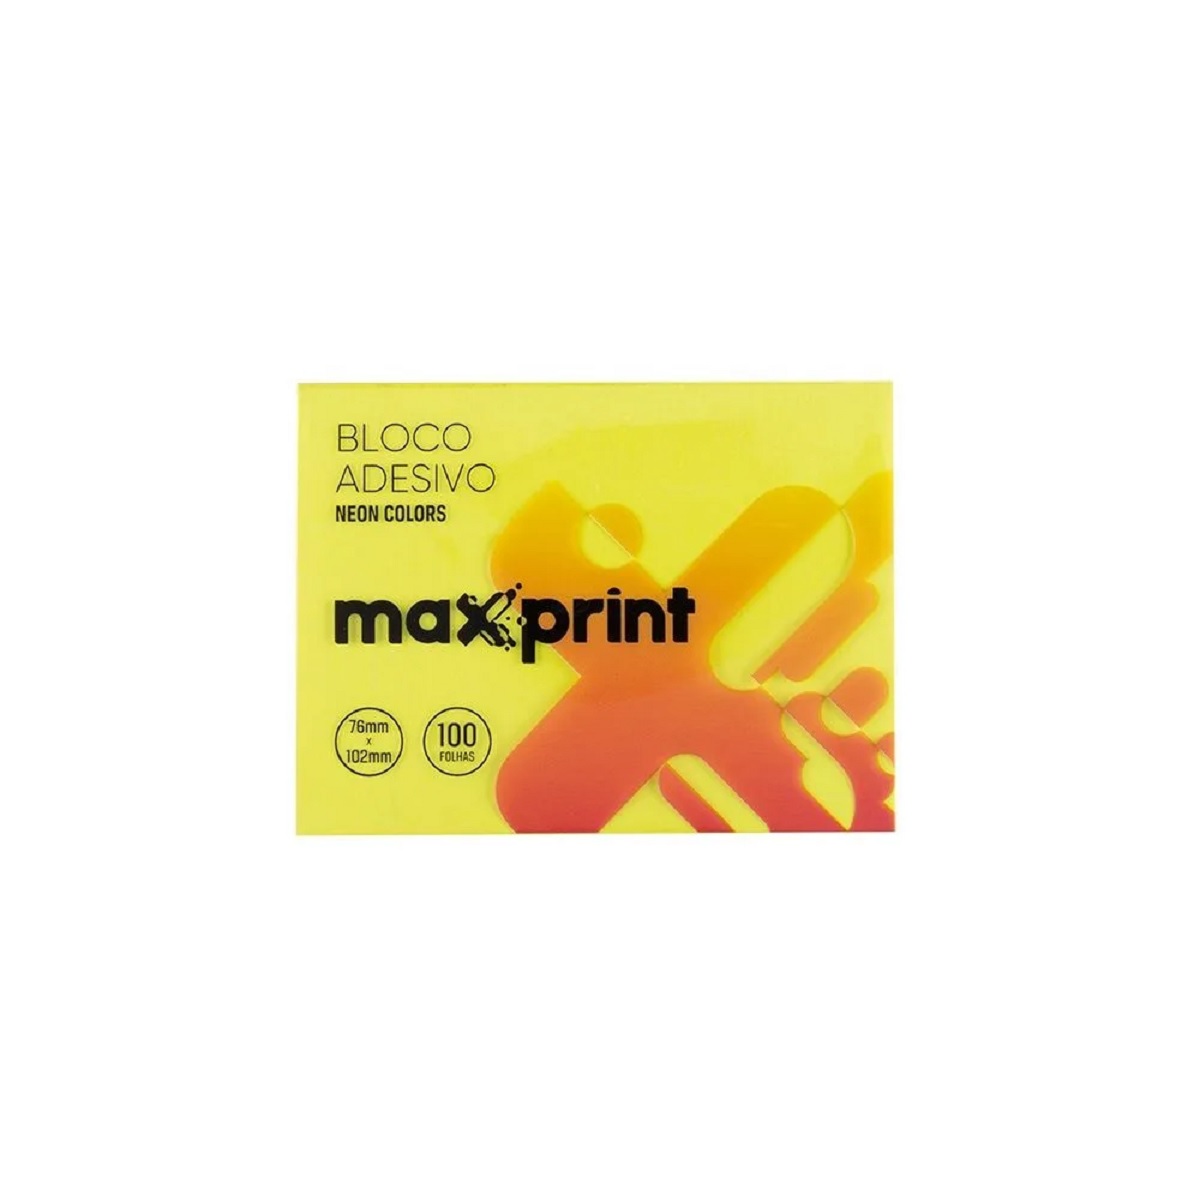 Bloco Adesivo Neon Colors Grande - Maxprint